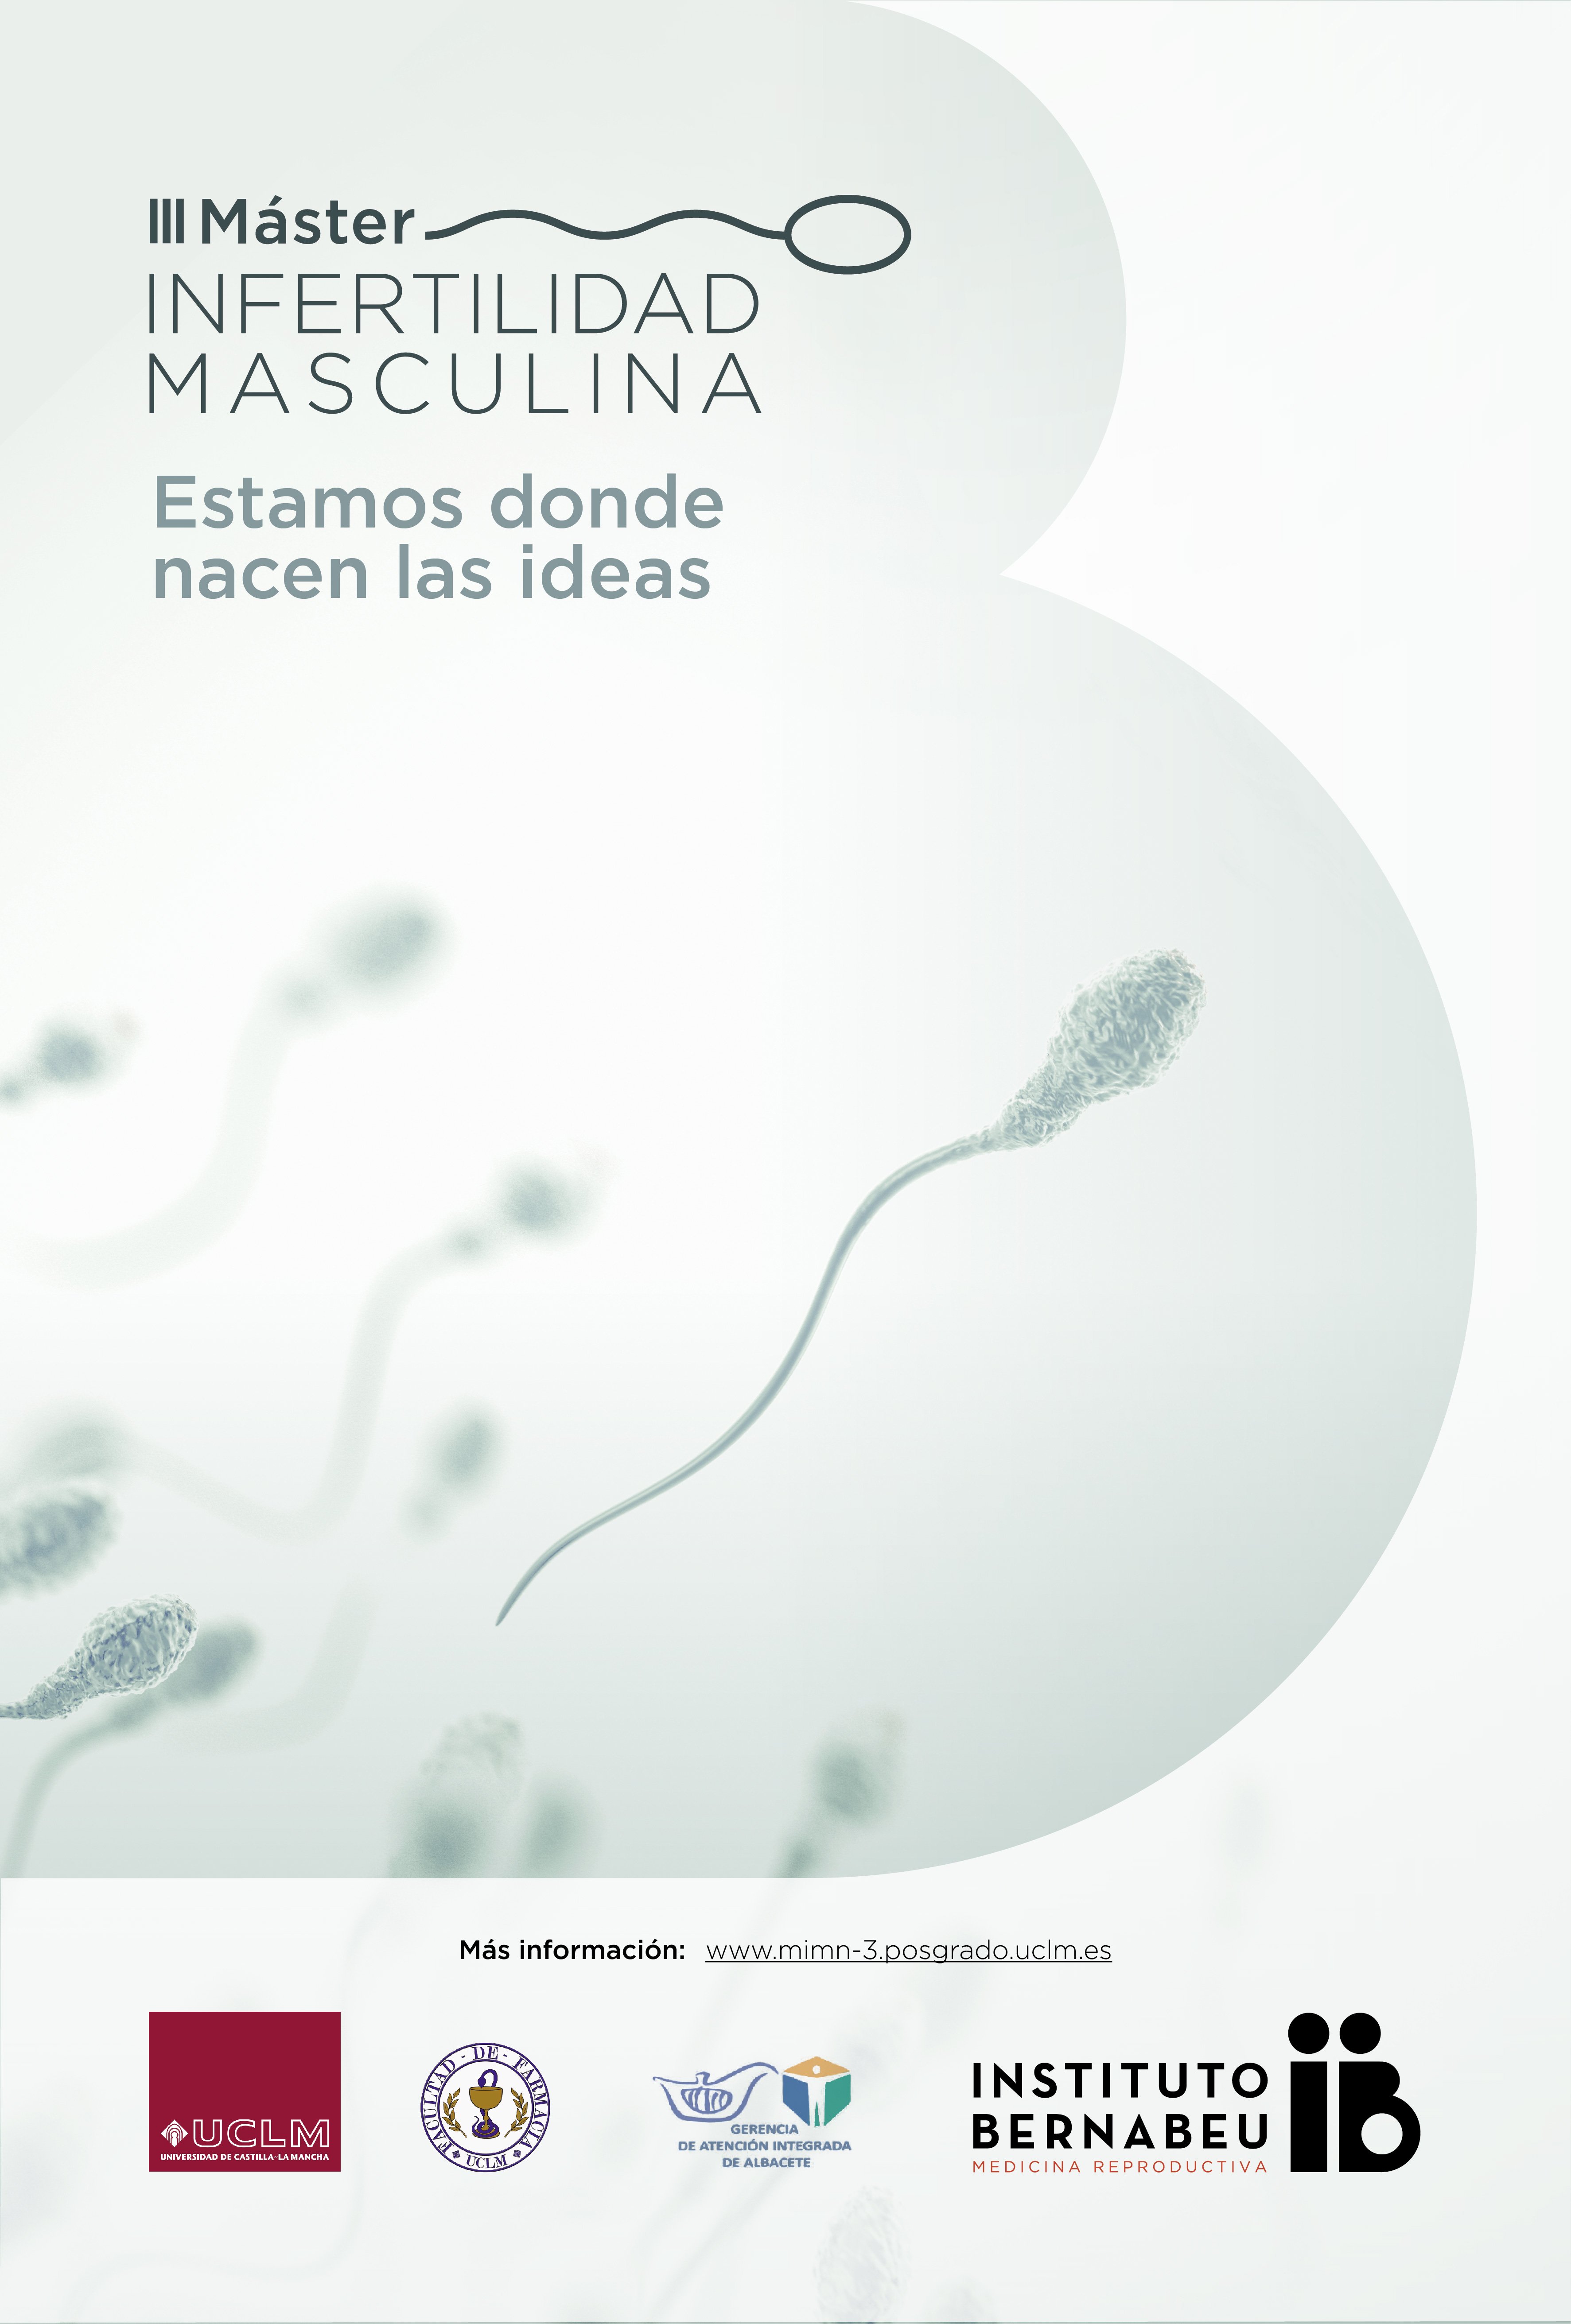 Institute Bernabeu – University of Castilla-La Mancha III Master in Male Infertility